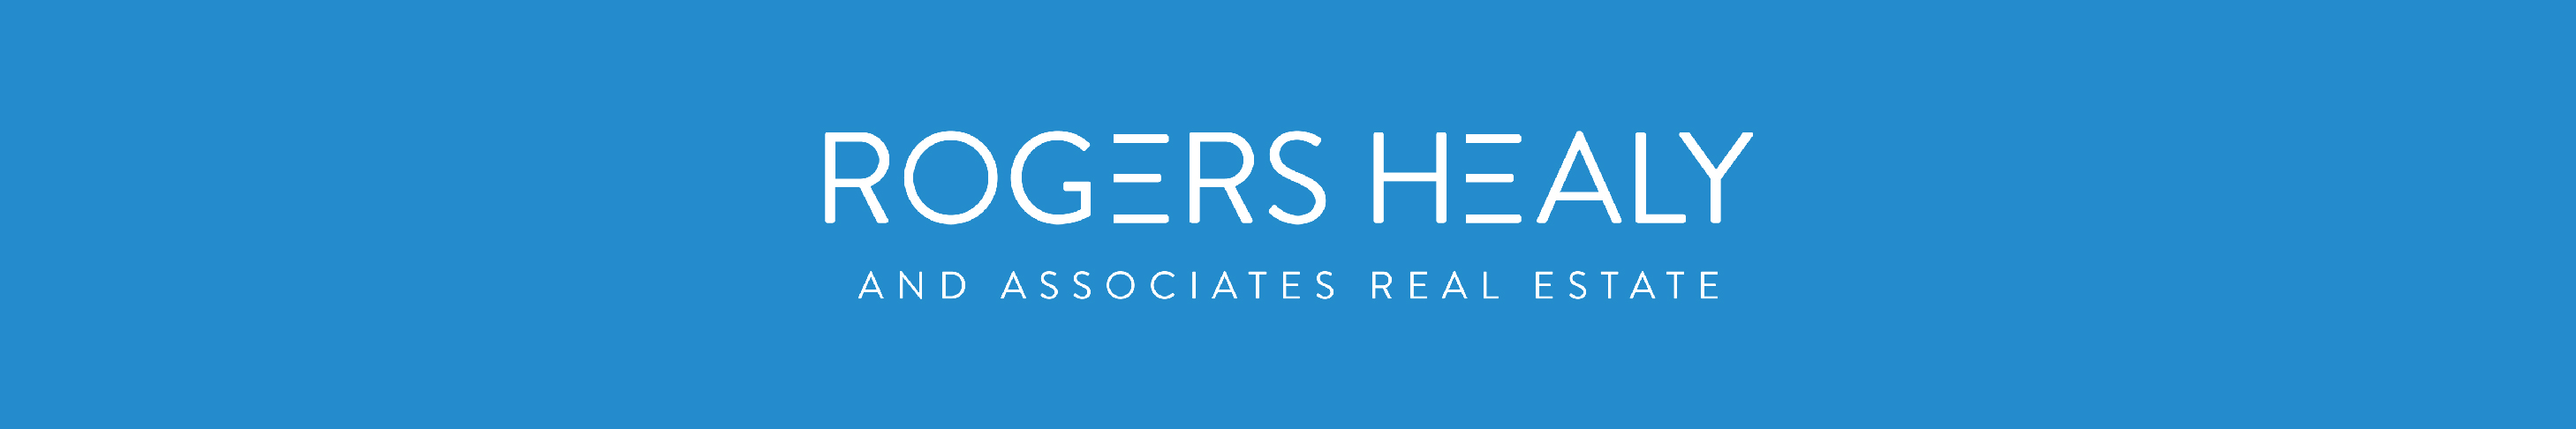 Dallas Mavs | Real Estate Partner